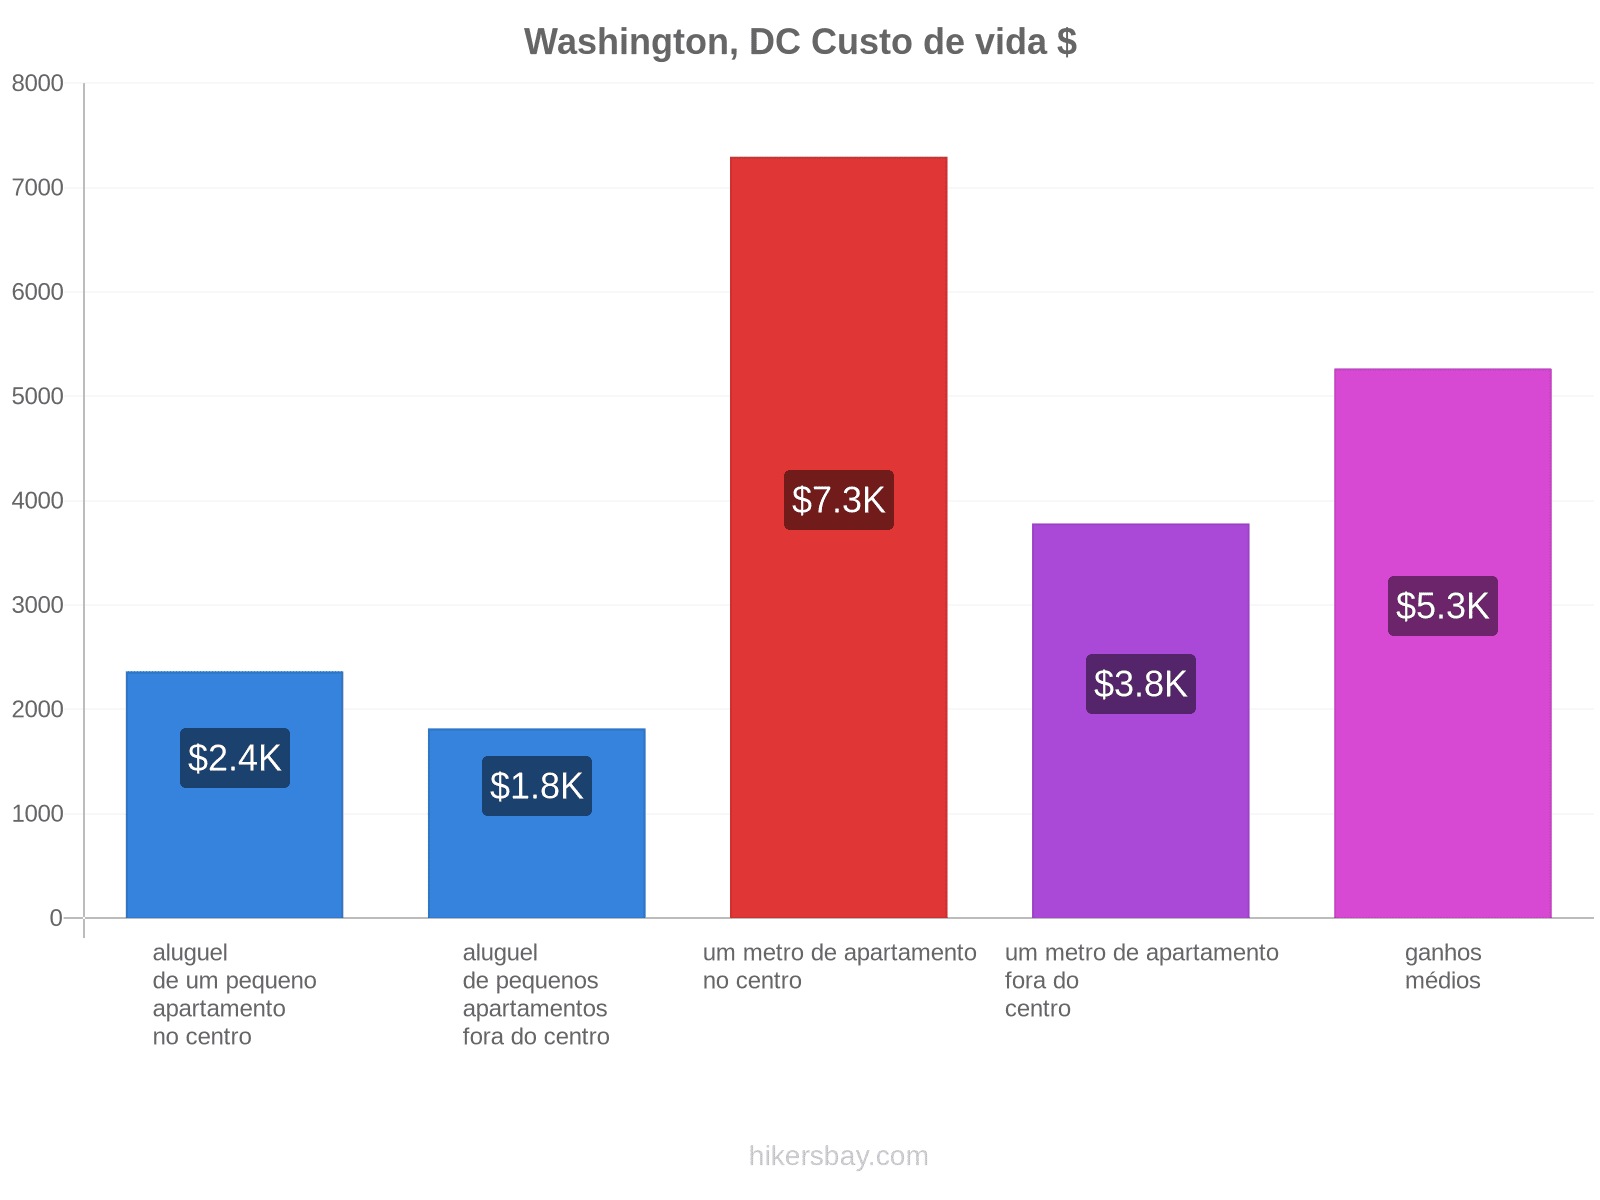 Washington, DC custo de vida hikersbay.com